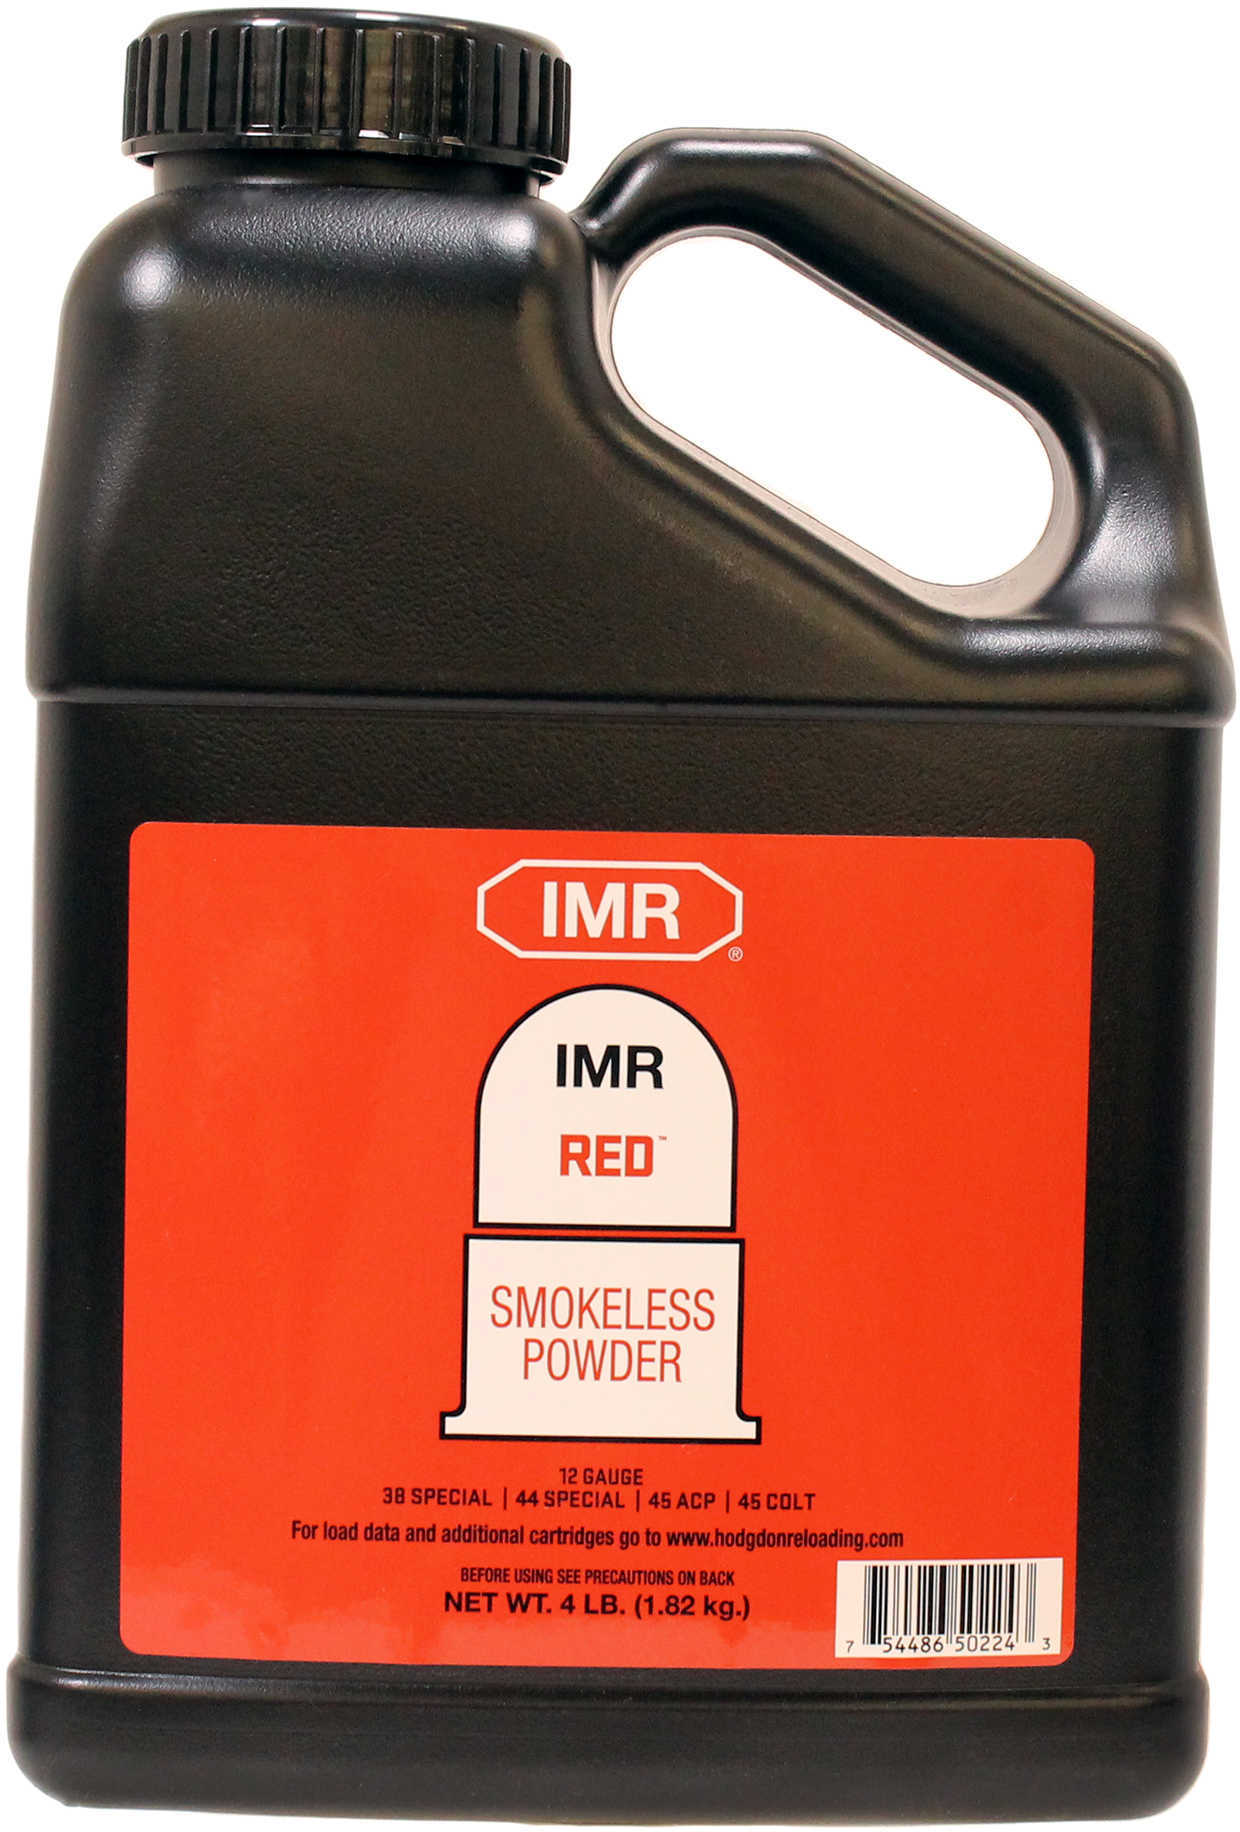 IMR Smokeless Powder Red 4 Lb